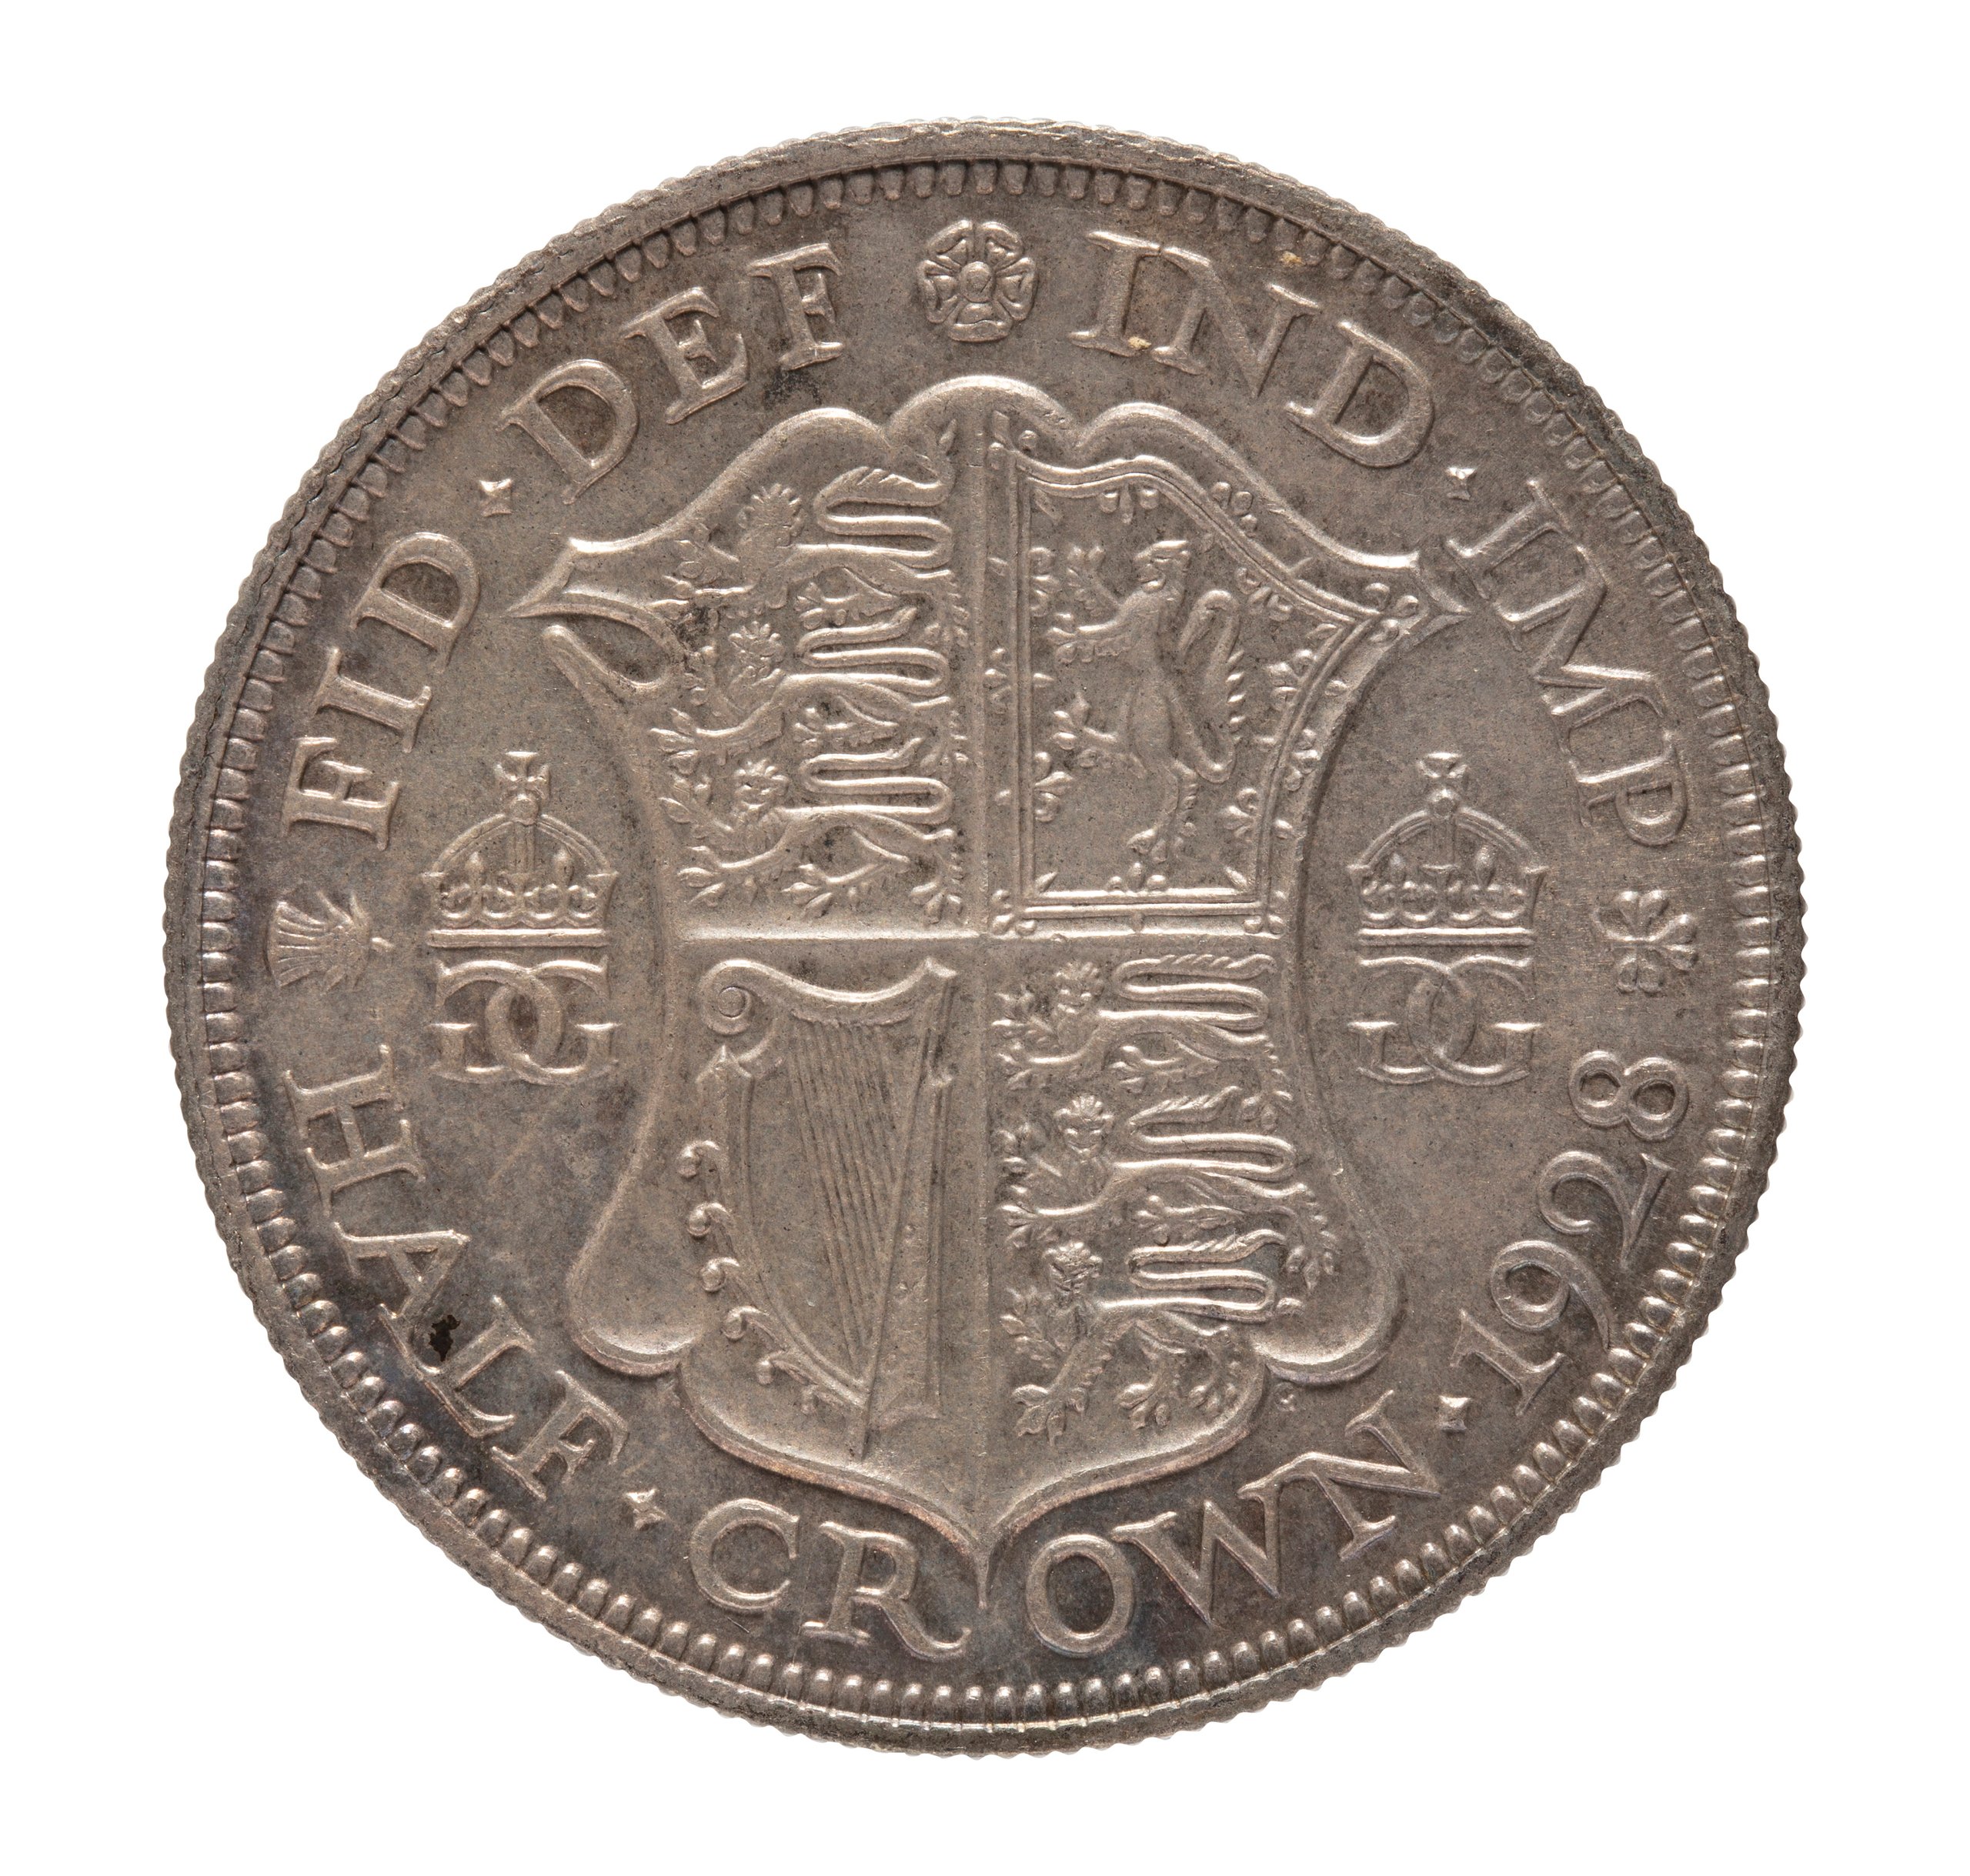 Half crown coin